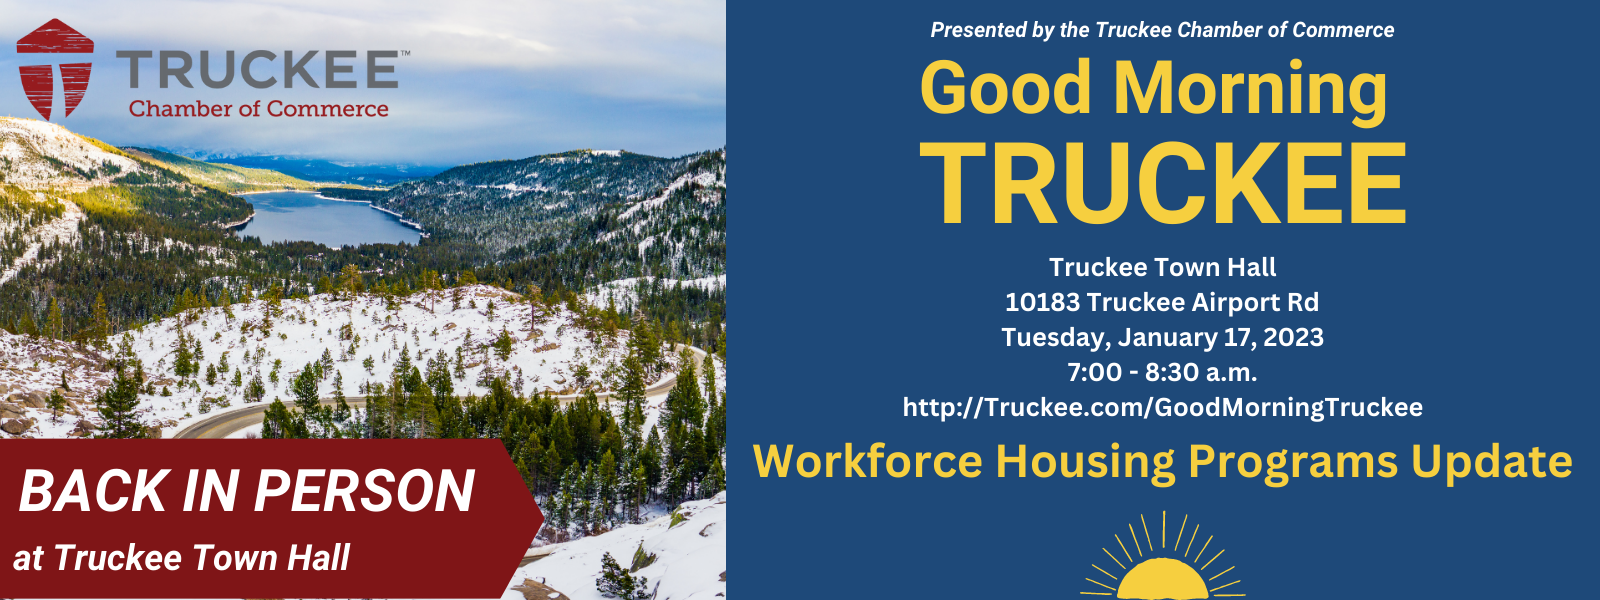 January 17, 2023 Good Morning Truckee: Workforce Housing Programs Update - VIEW RECORDING